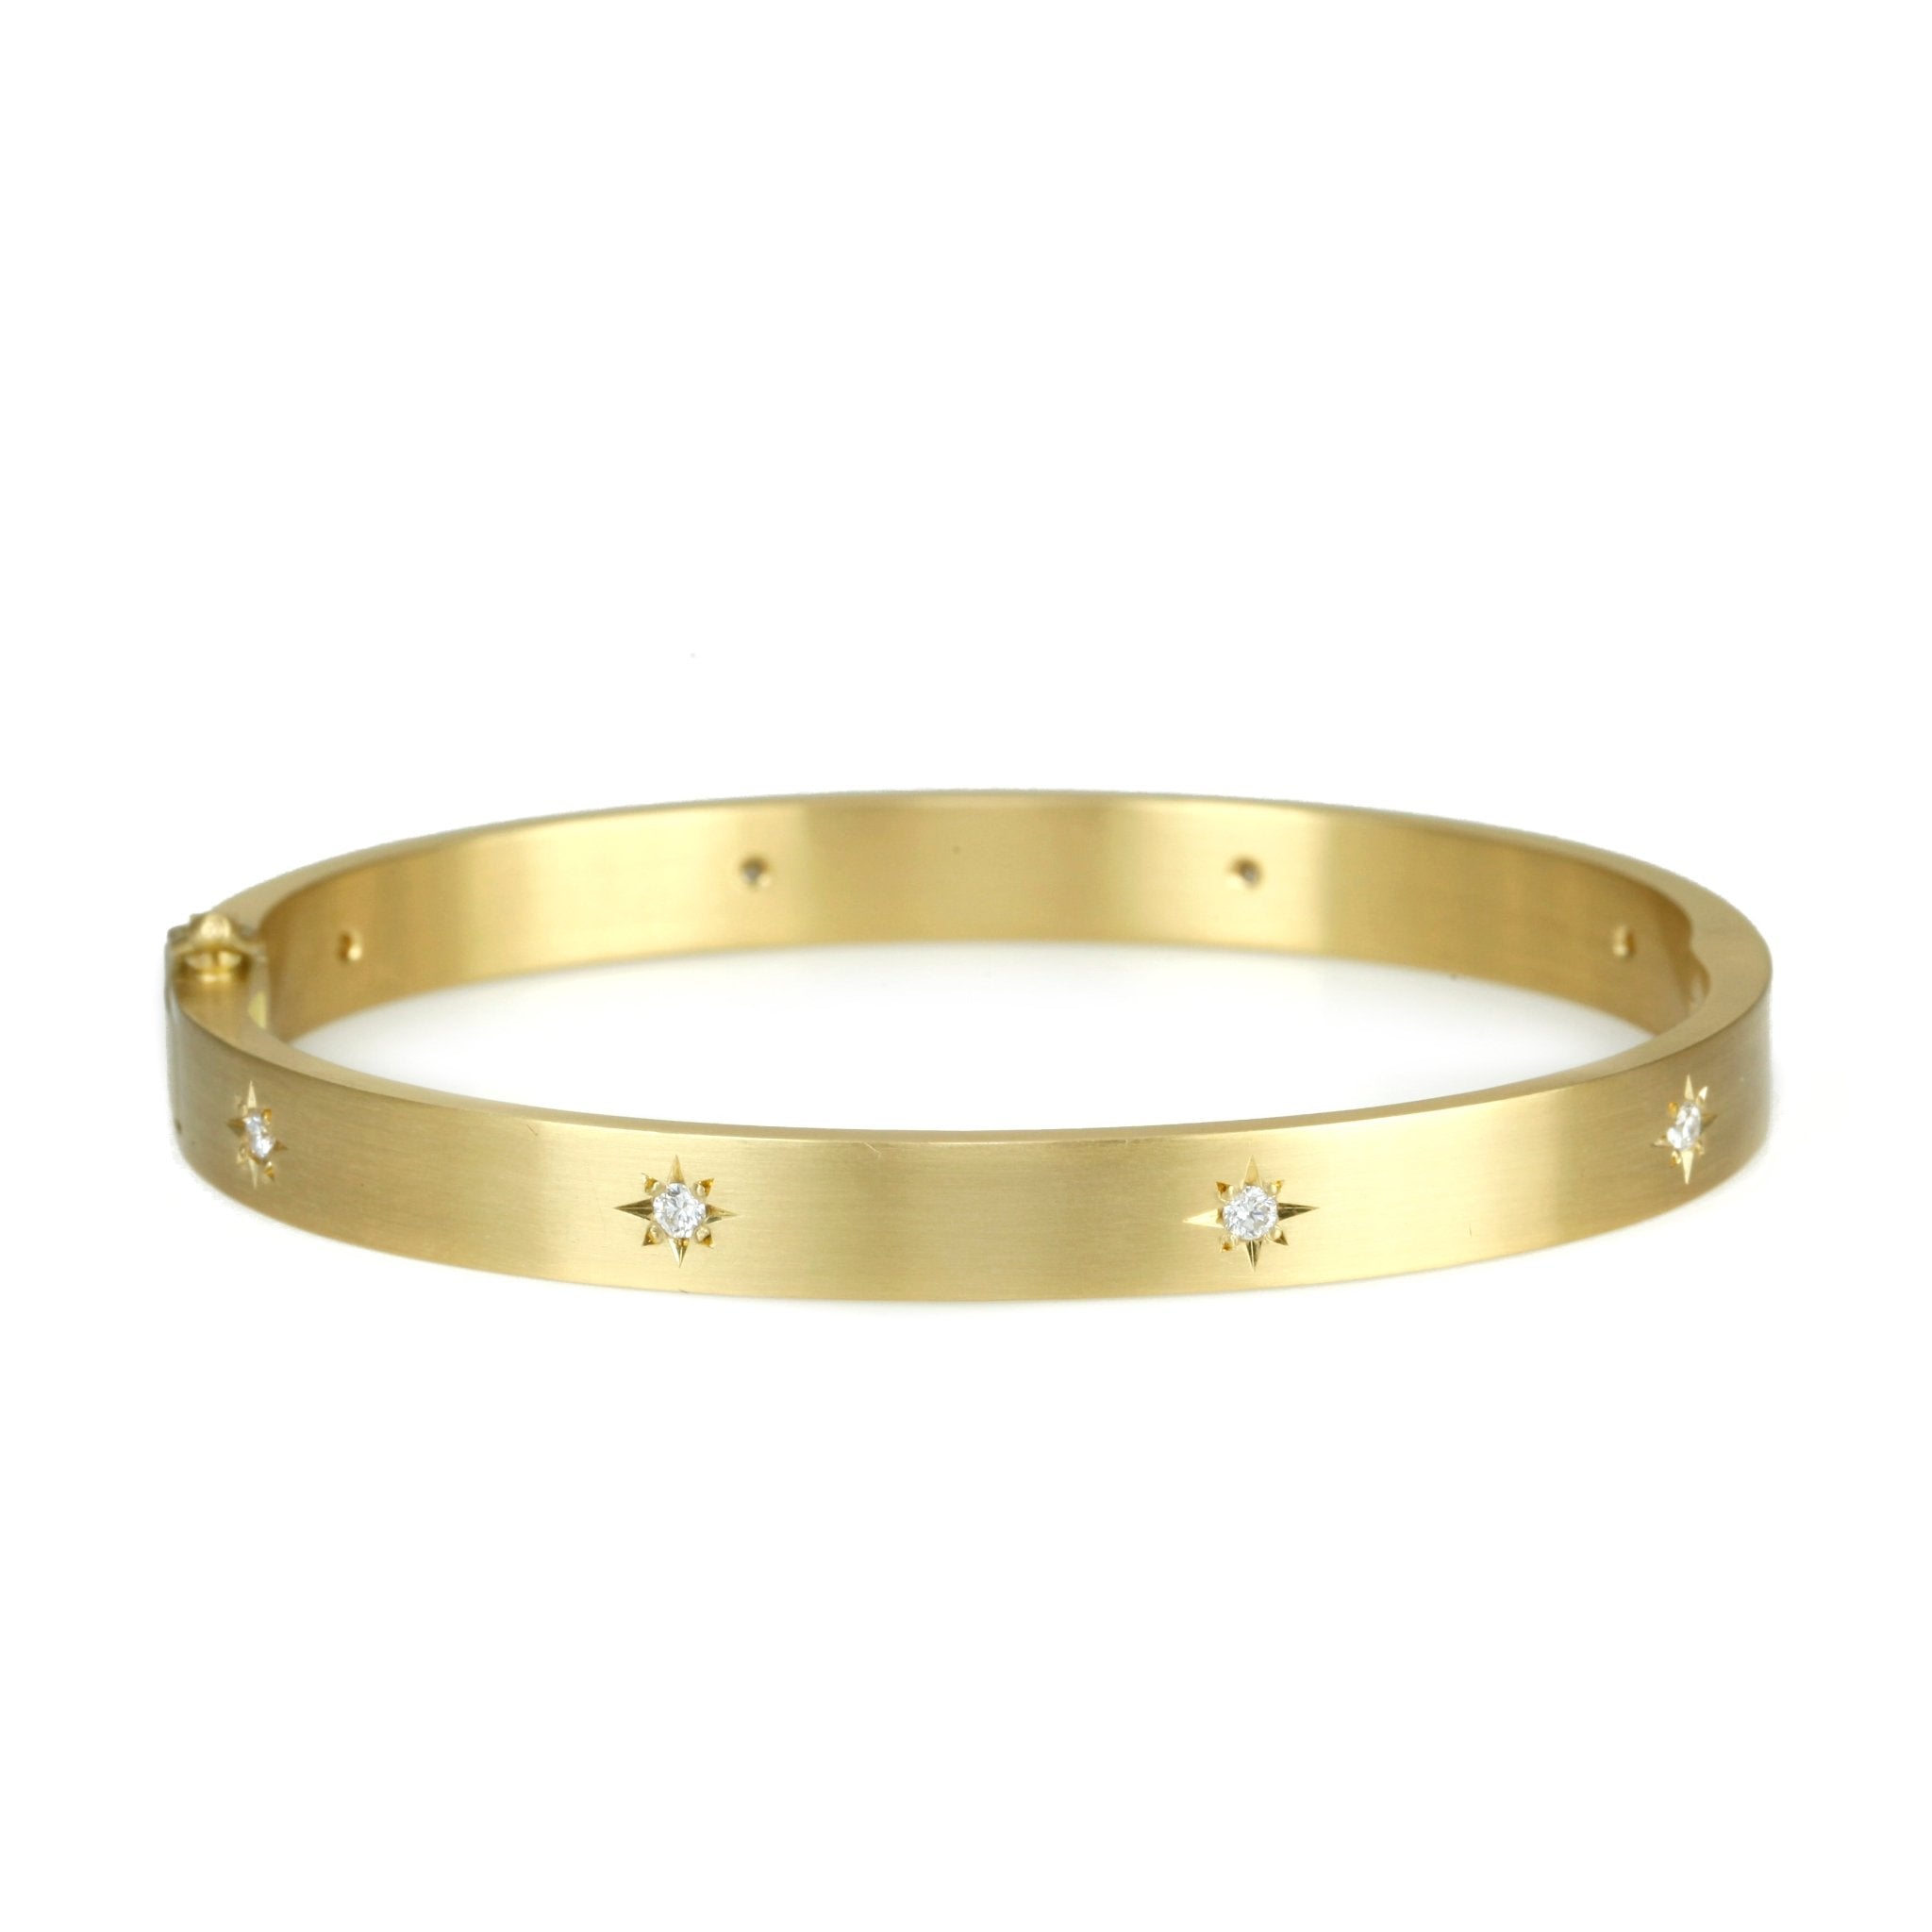 18K Gold Wide Hinged Bangle Bracelet with 8 Star-Set Diamonds